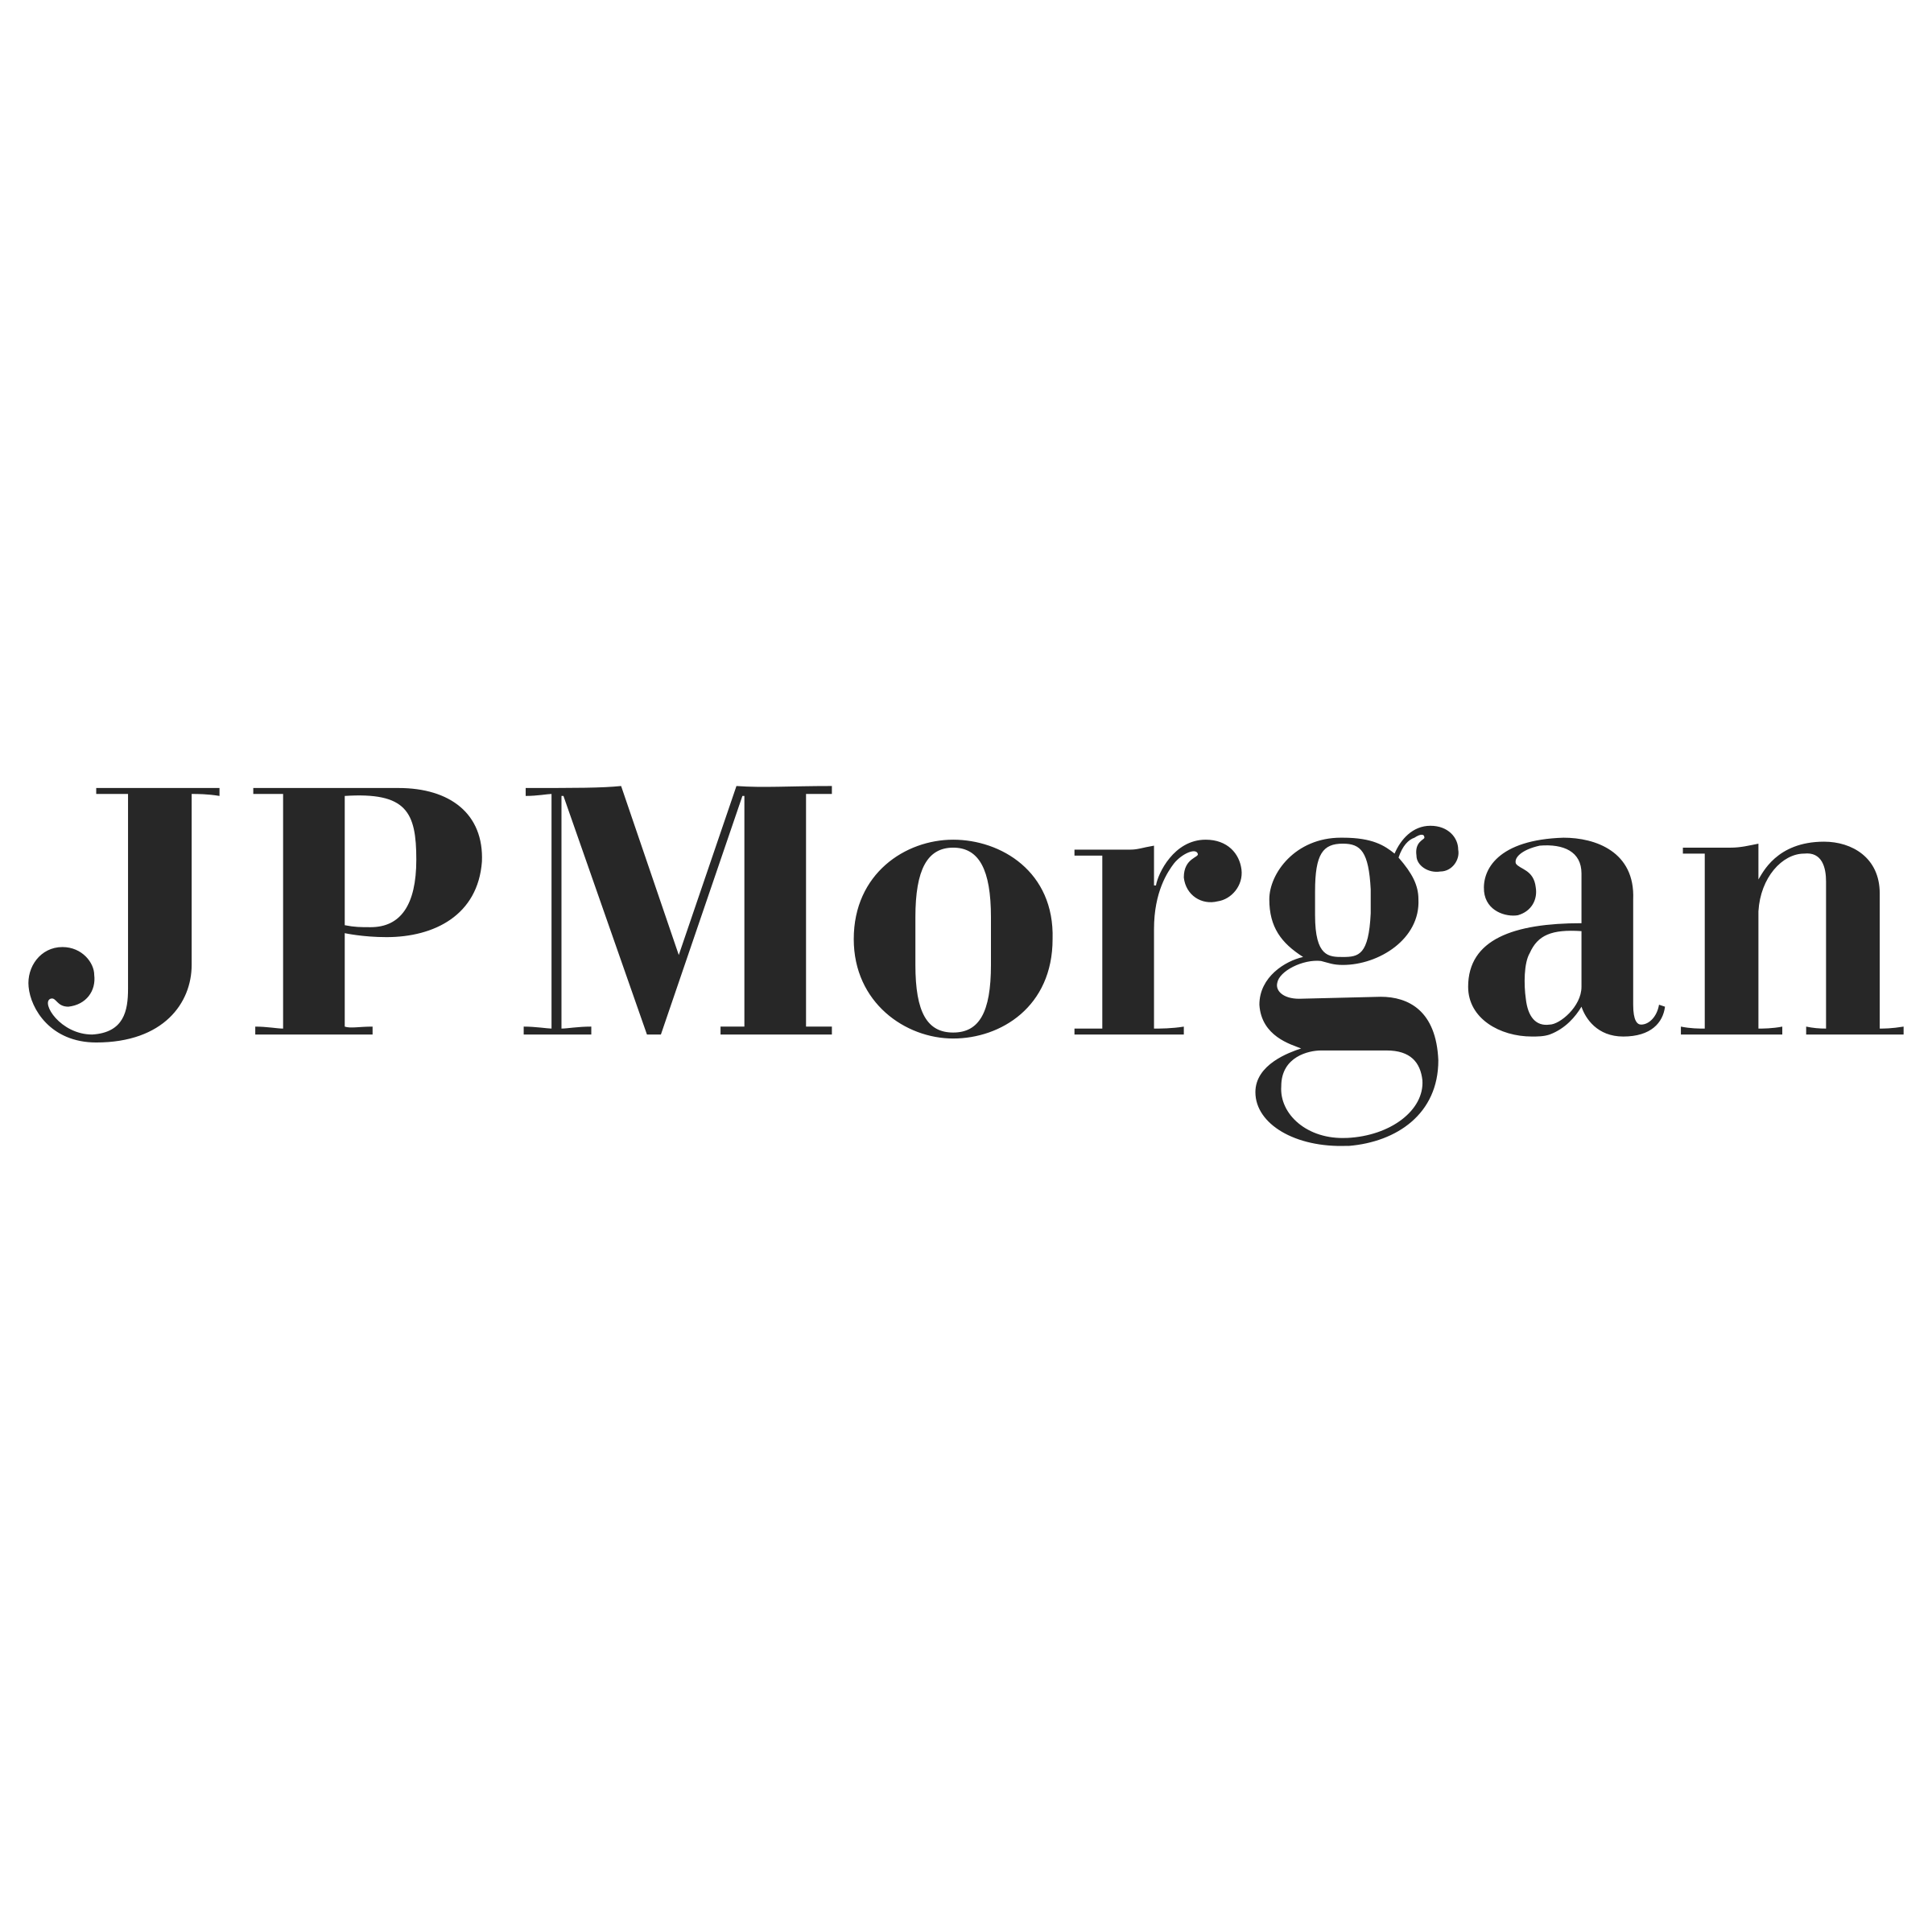 jpmorgan-logo-png-transparent.png